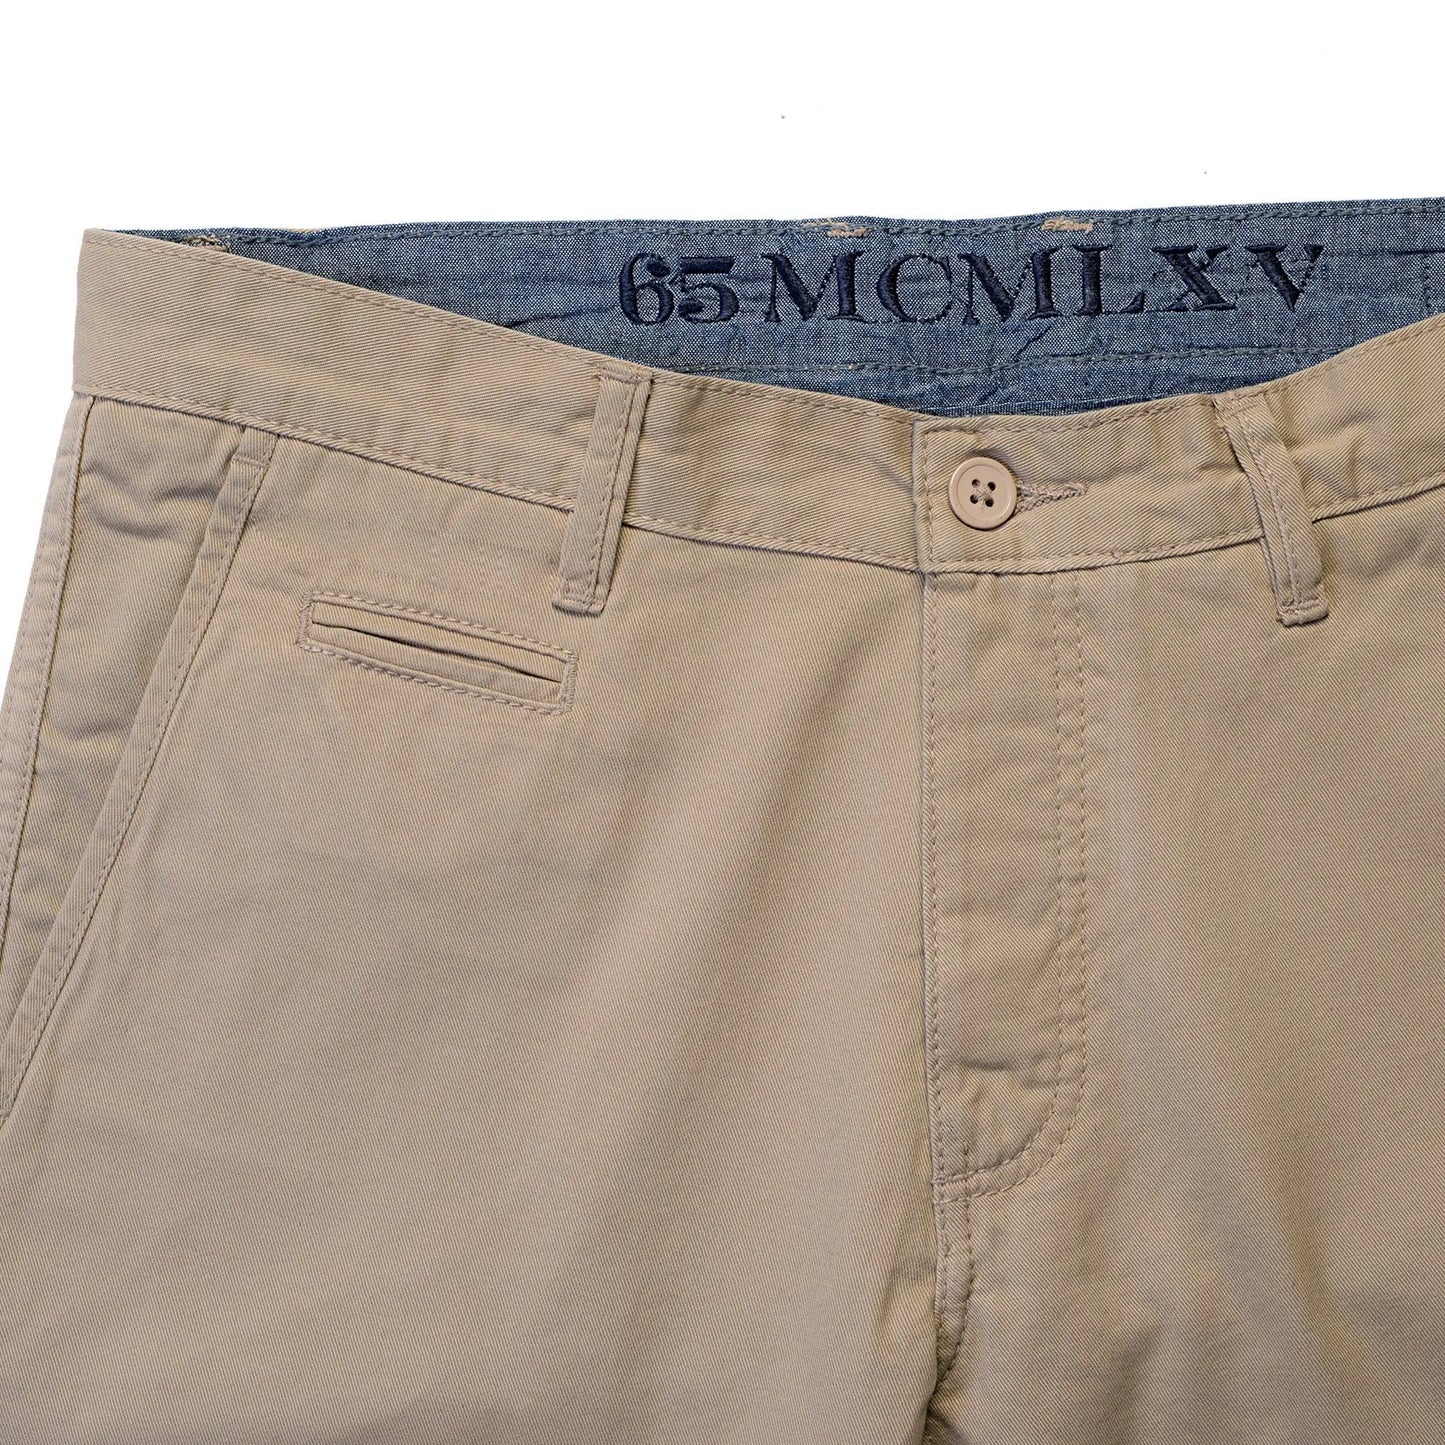 65 MCMLXV Men's Khaki Chino Pant - Image #6